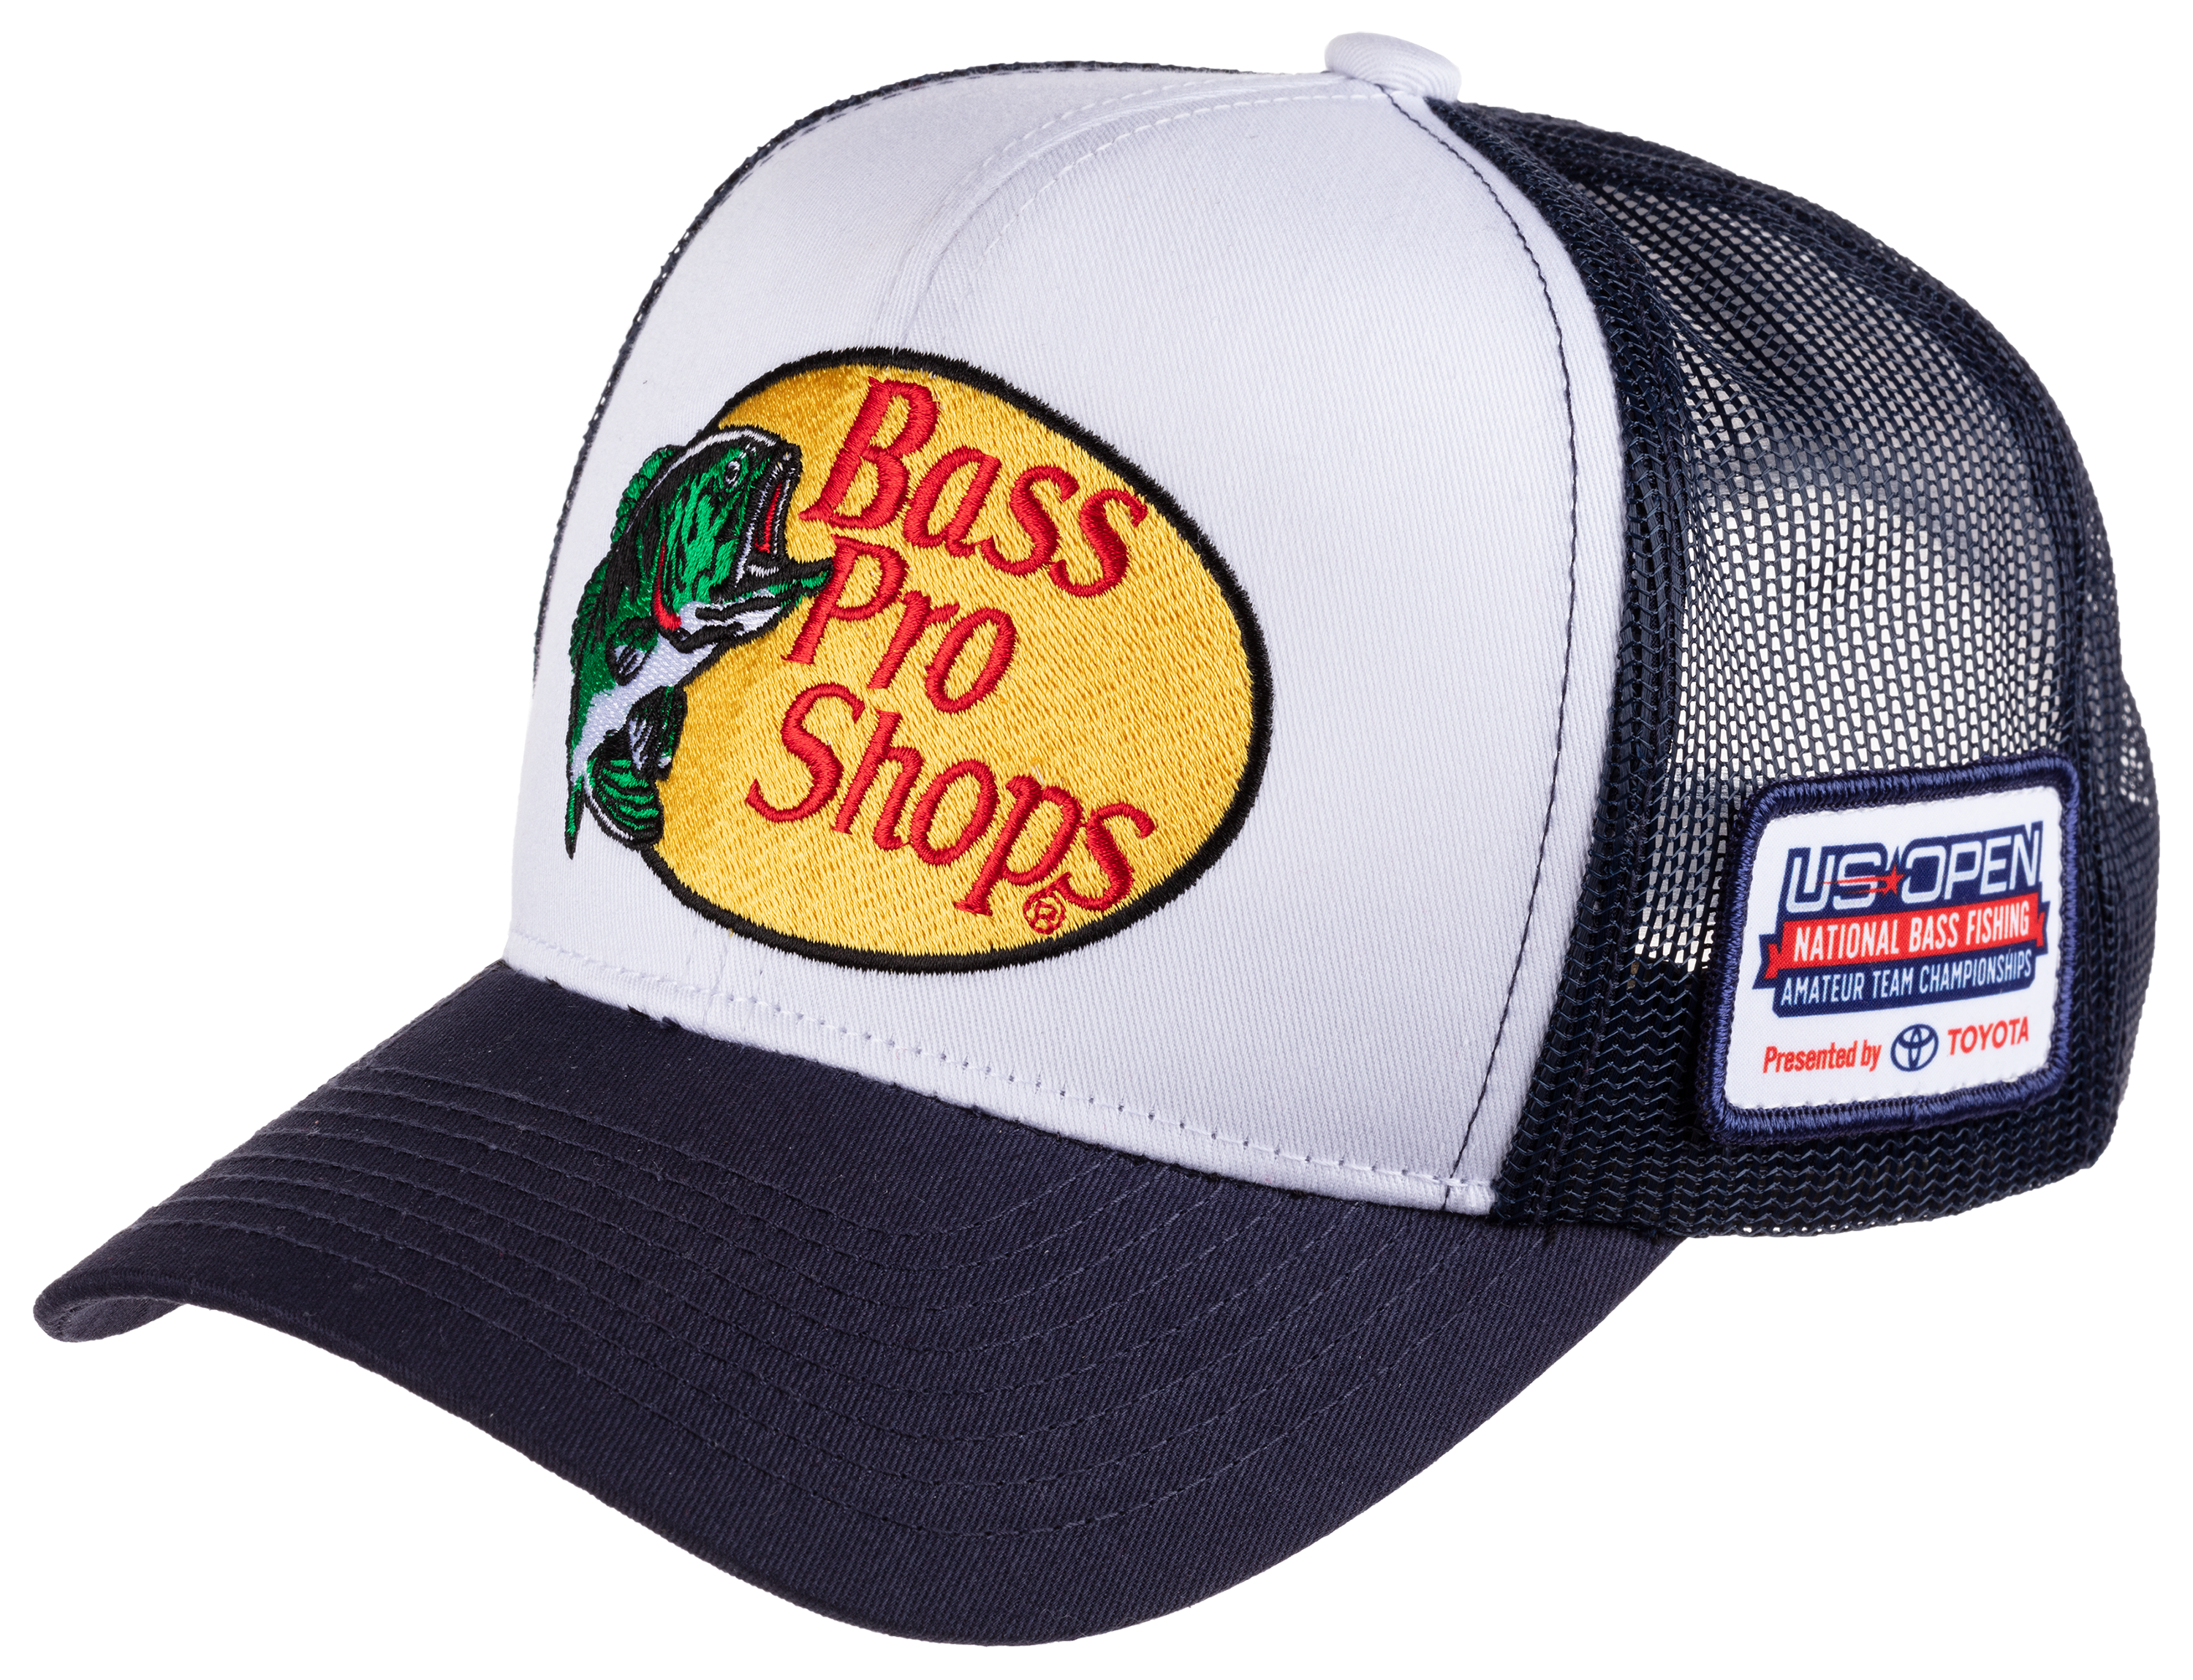 Bass Pro Shops US Open Mesh-Back Tournament Cap